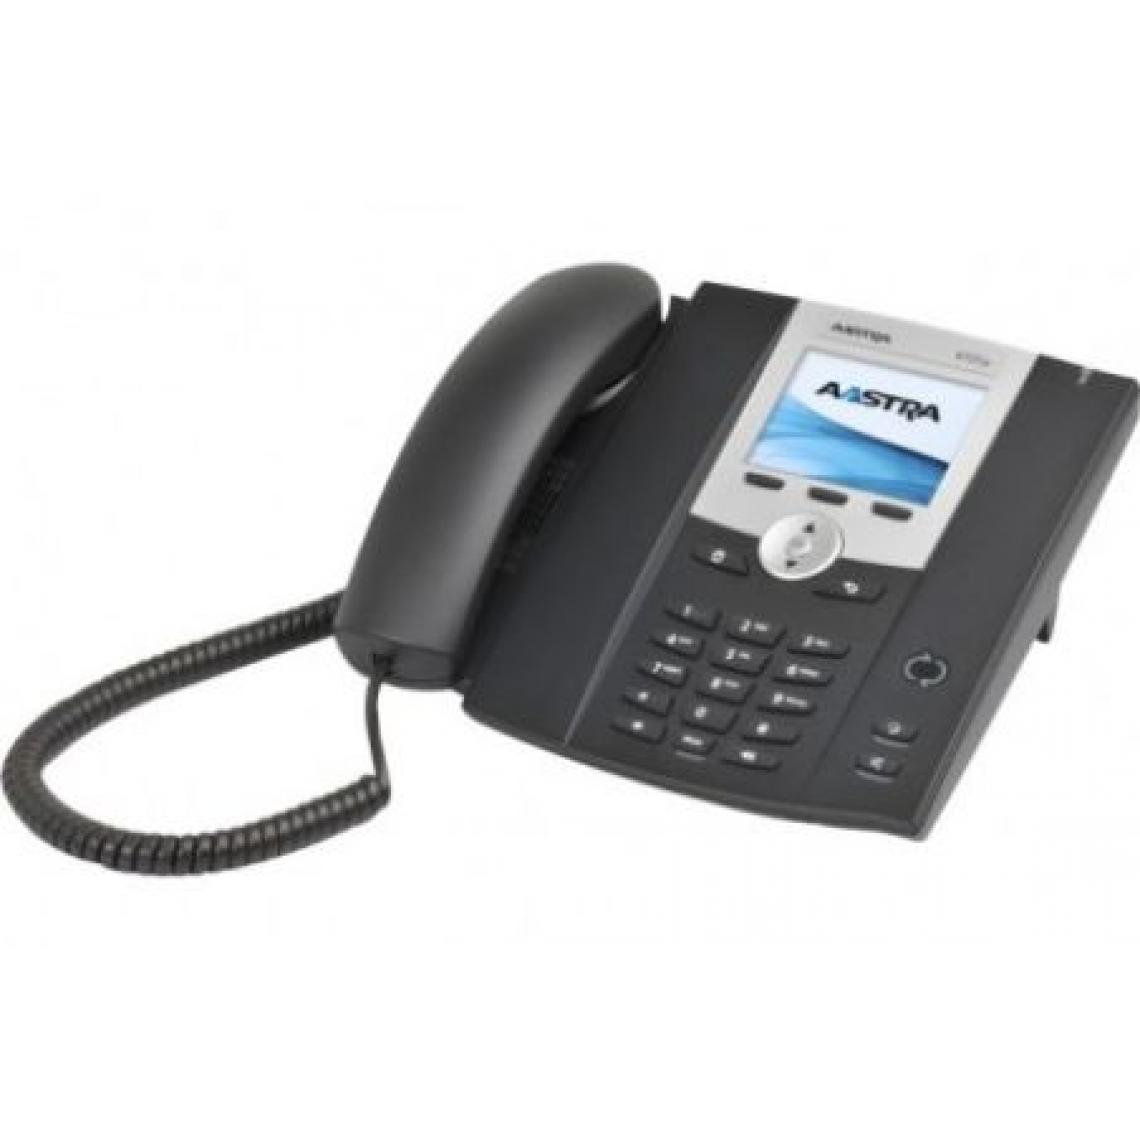 Aastra - Aastra 6725ip , noir - IP-téléphone - Téléphone fixe filaire